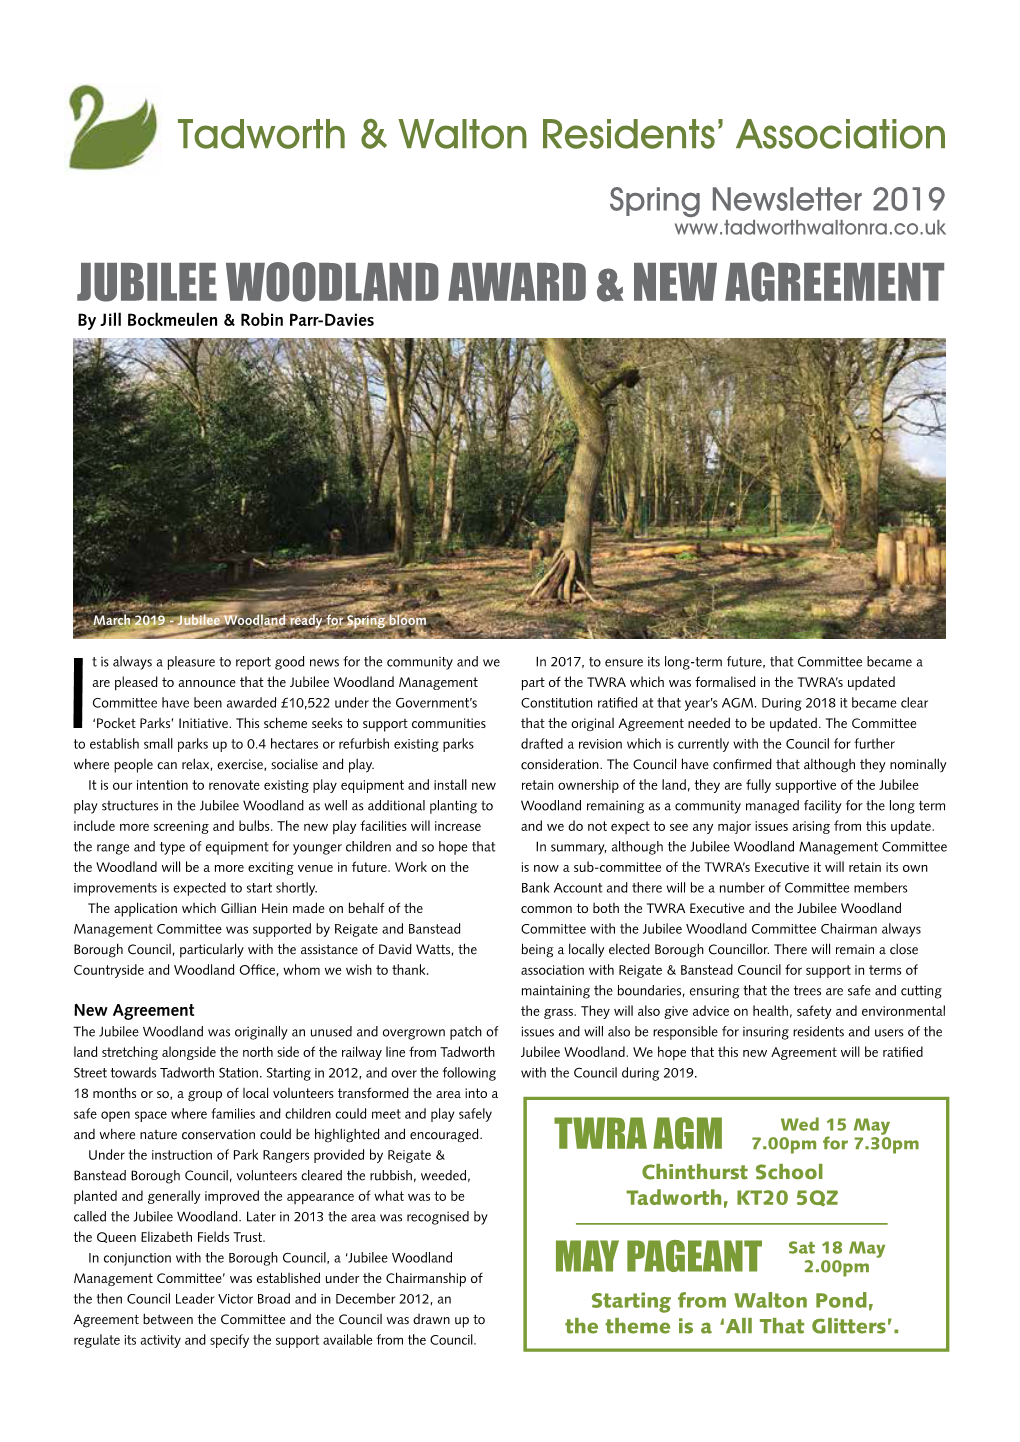 Jubilee Woodland Award & New Agreement